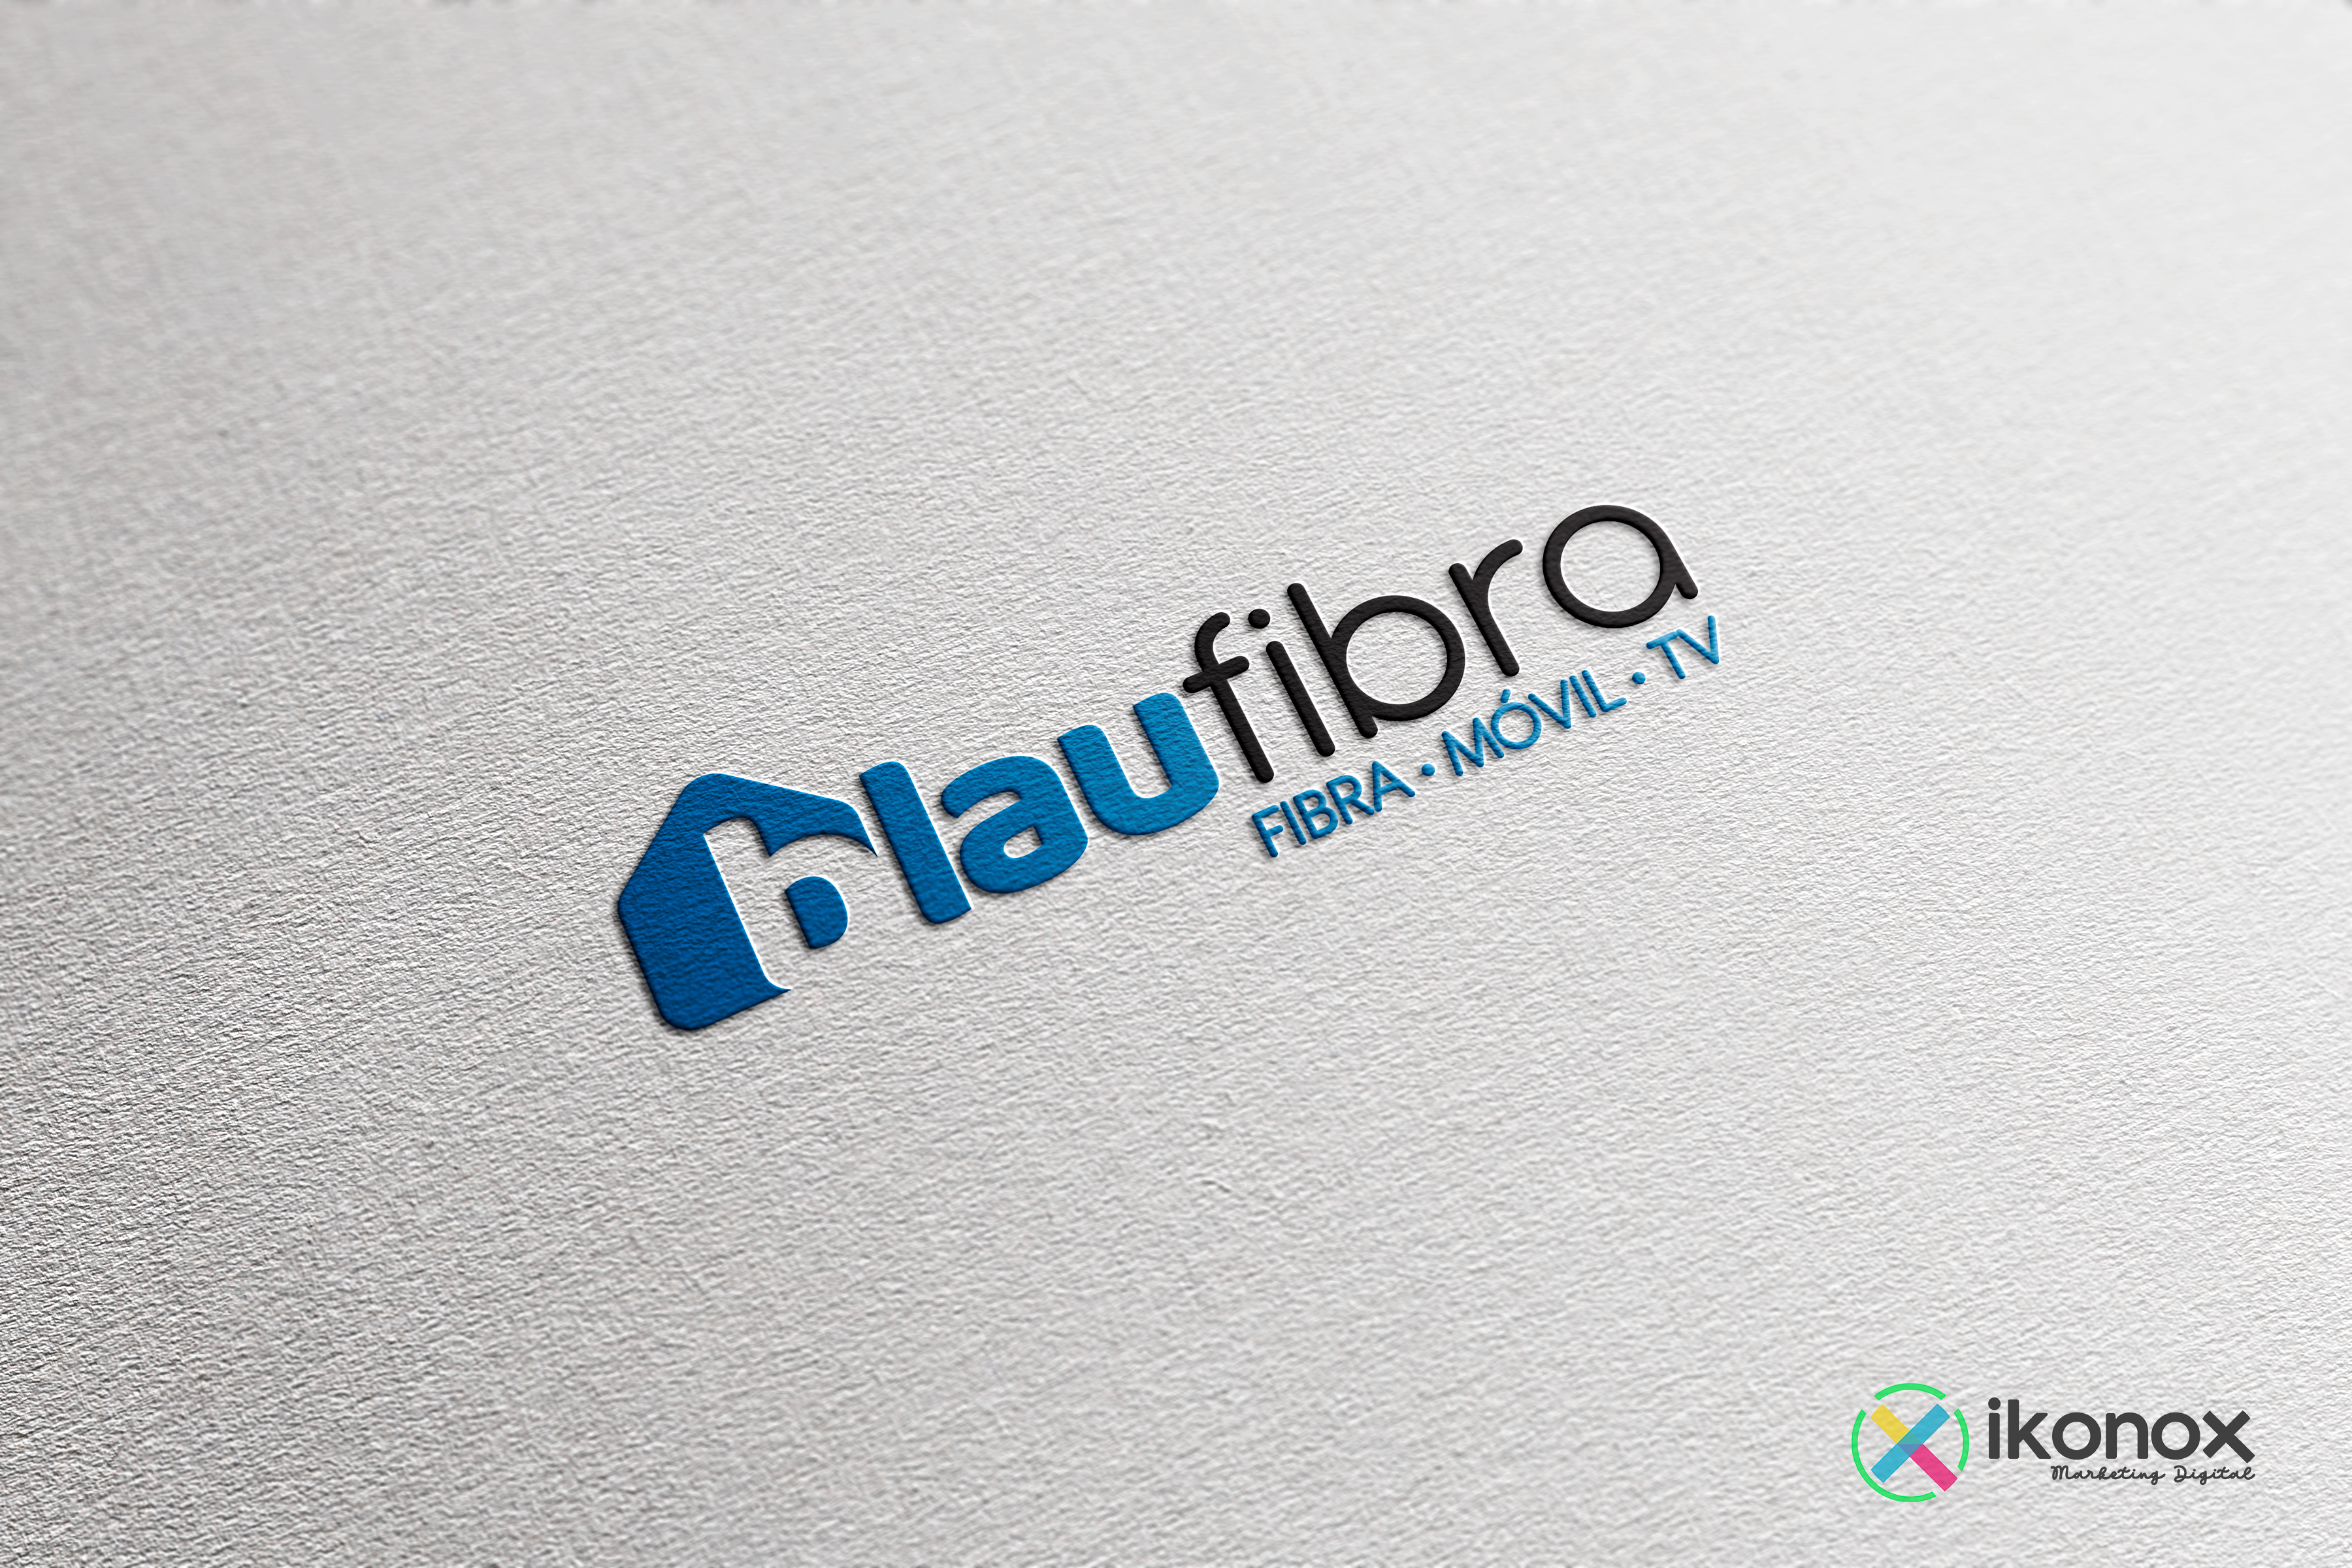 Ikonox-Marketing-logo-BLAUFIBRA-3